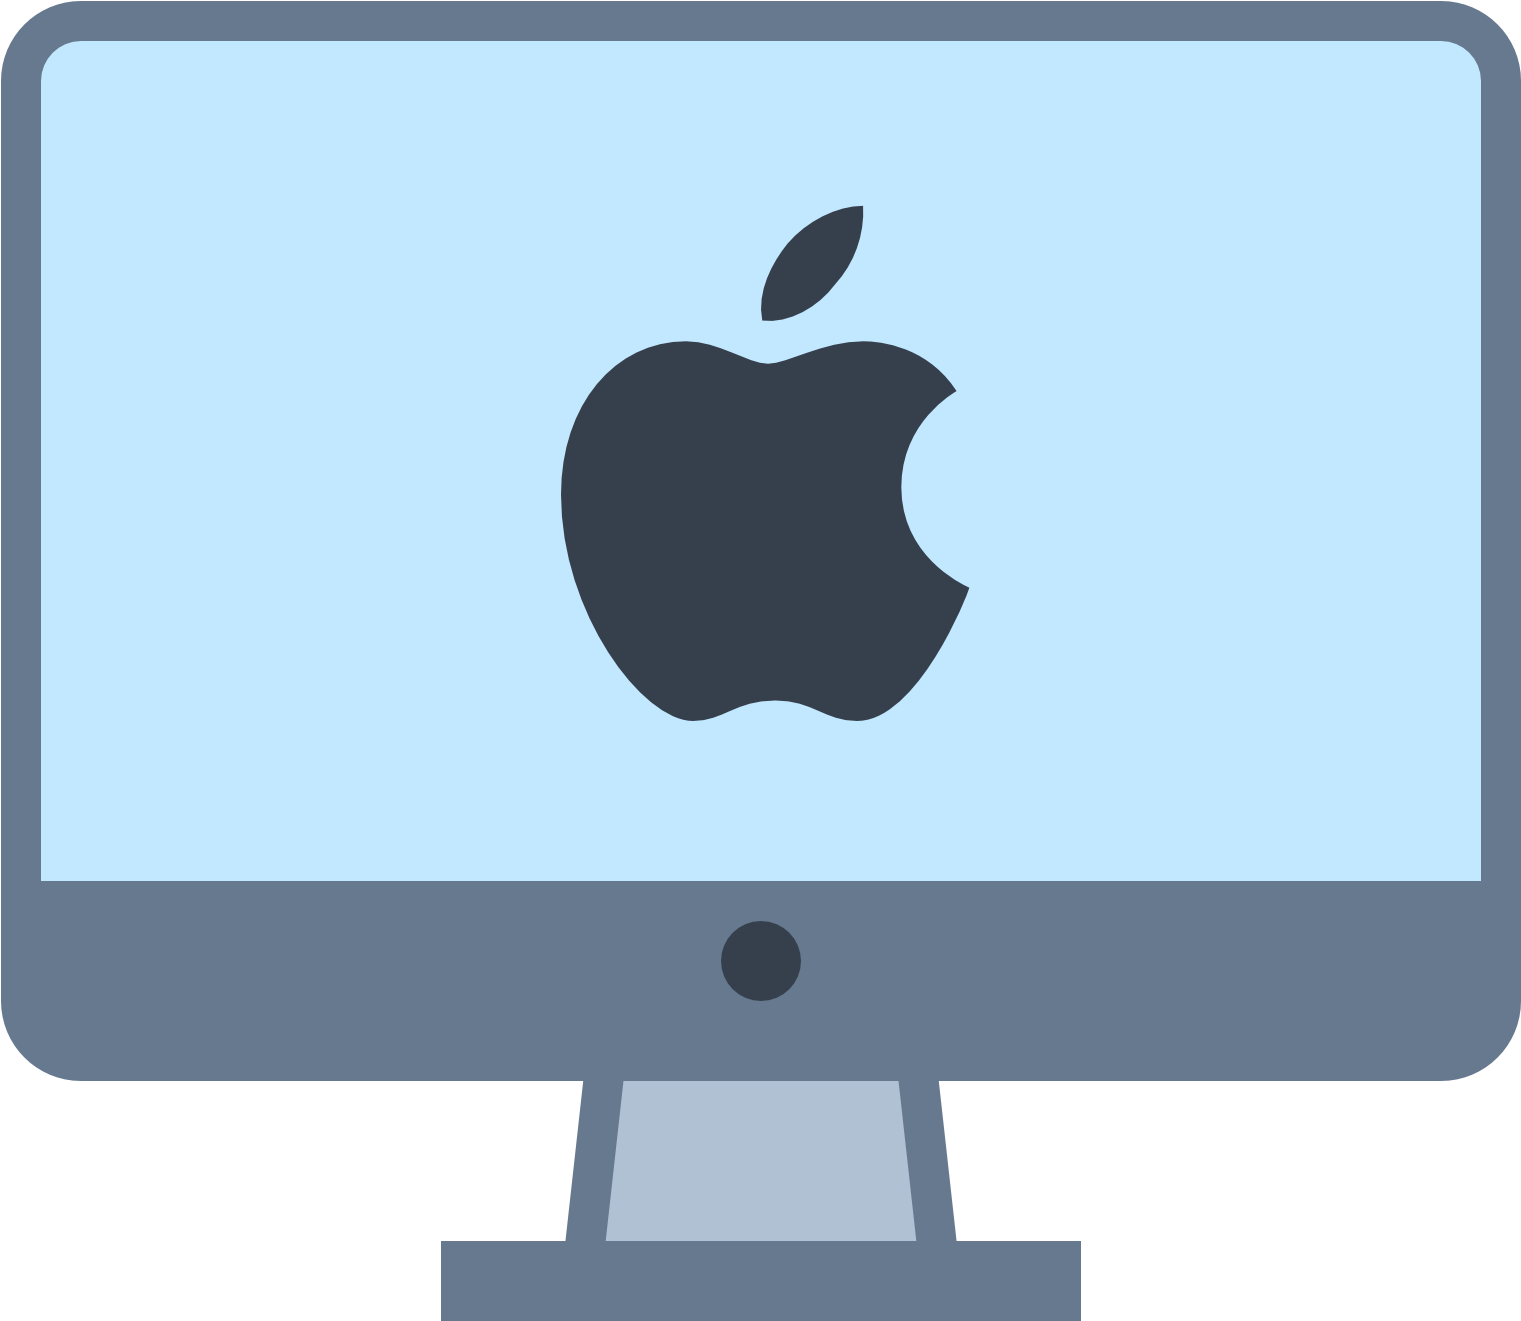 Applei Mac Icon Illustration